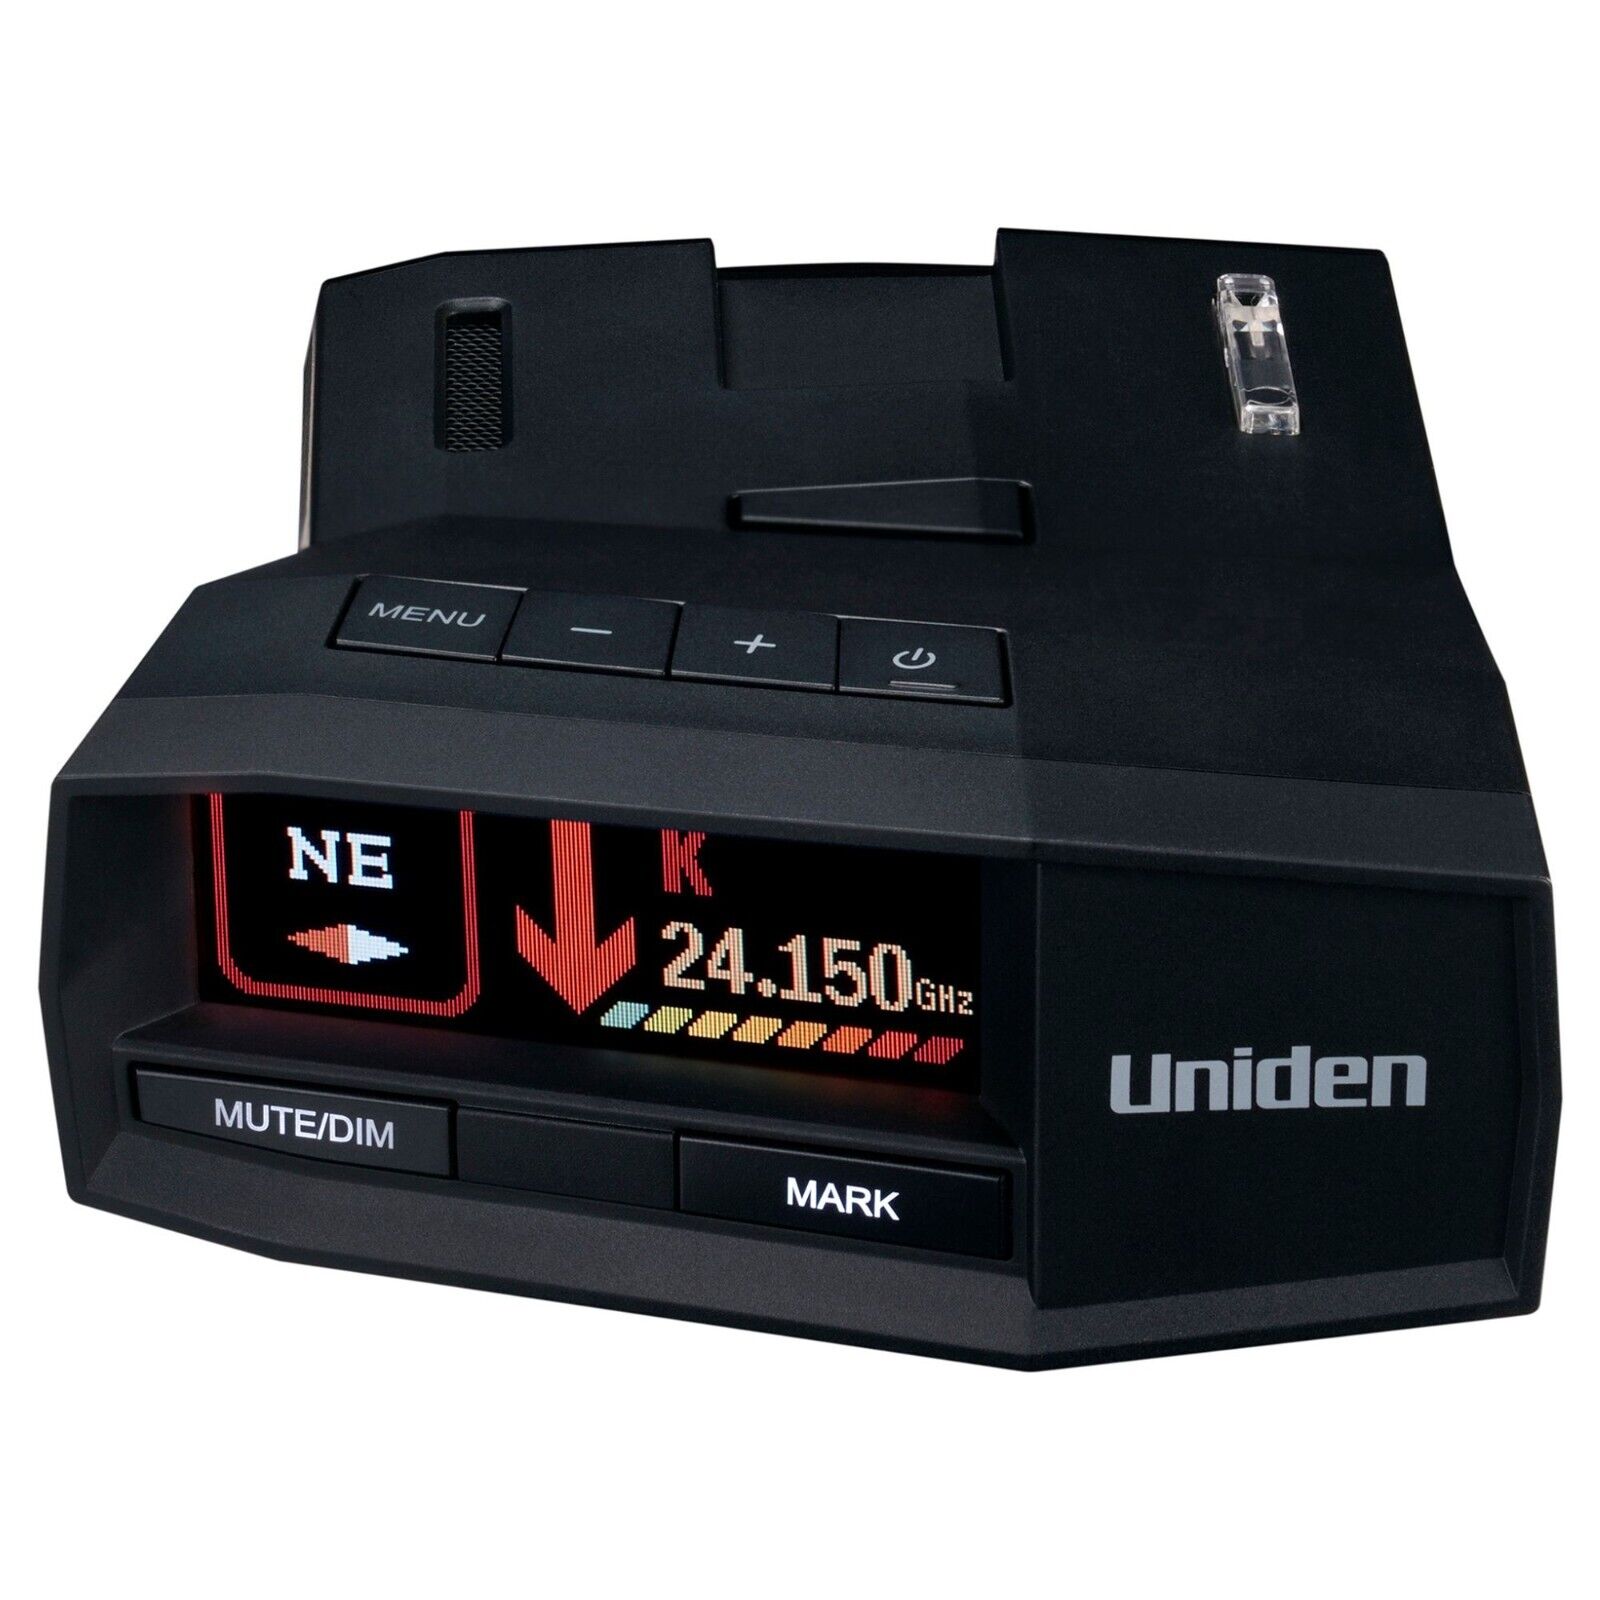 Uniden R8 Radar/Laser Detector Long Range with Built-In GPS, Directional Arrows